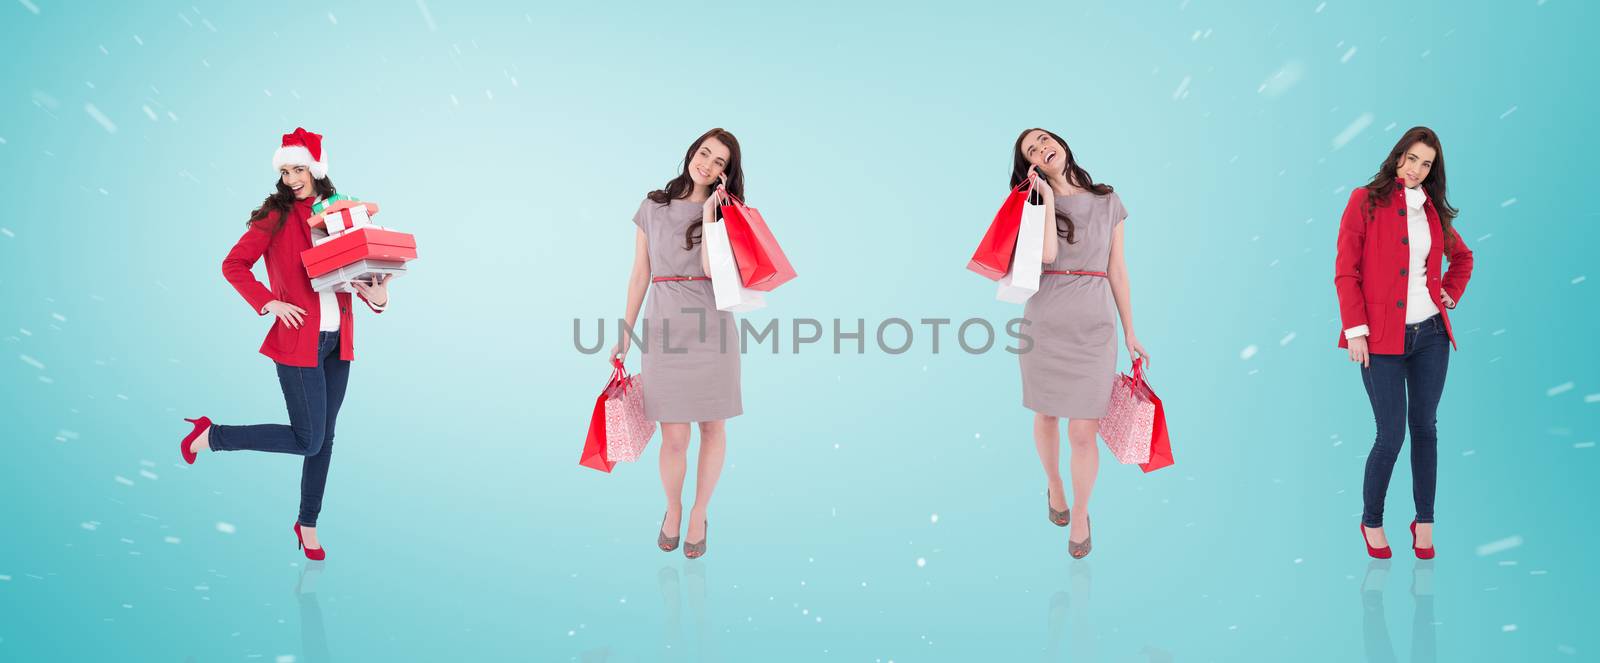 Composite image of different elegant brunettes by Wavebreakmedia